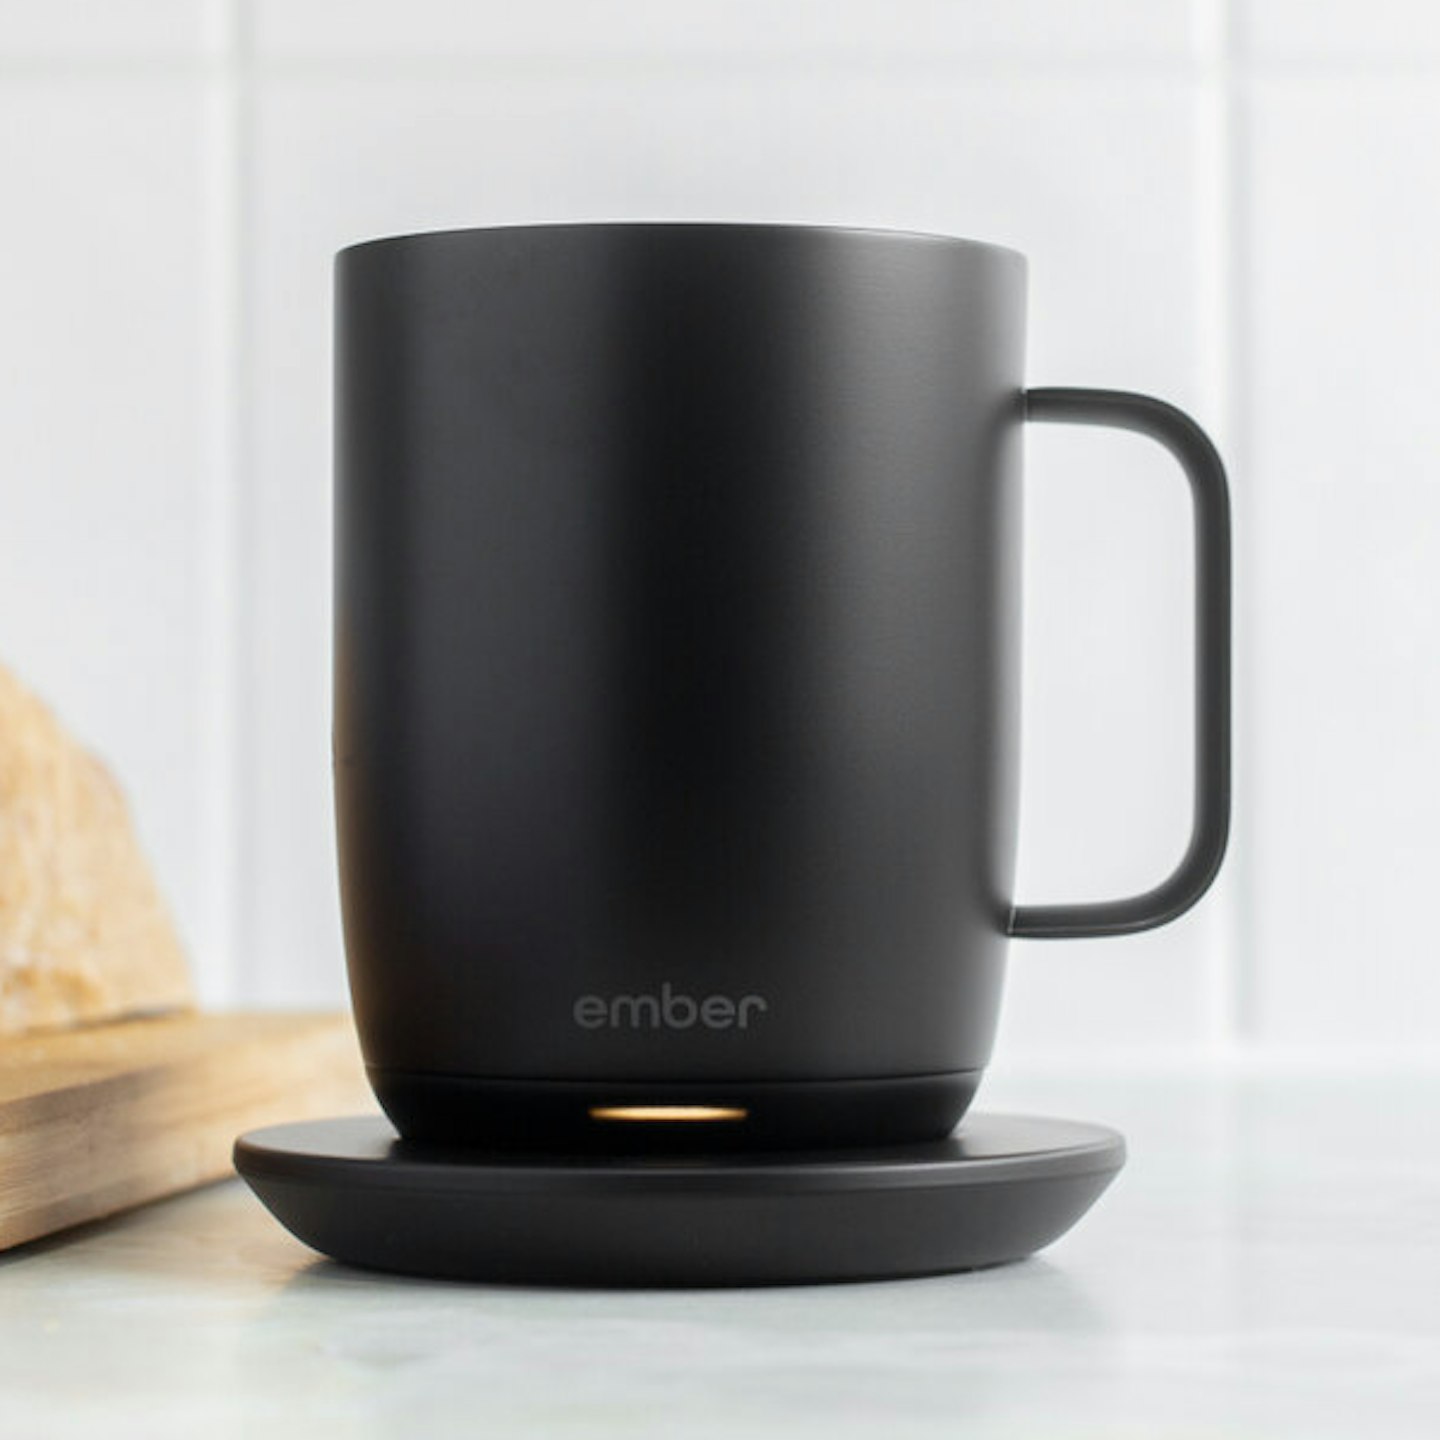 Ember Mug Temperature Control Smart Mug, £99.99